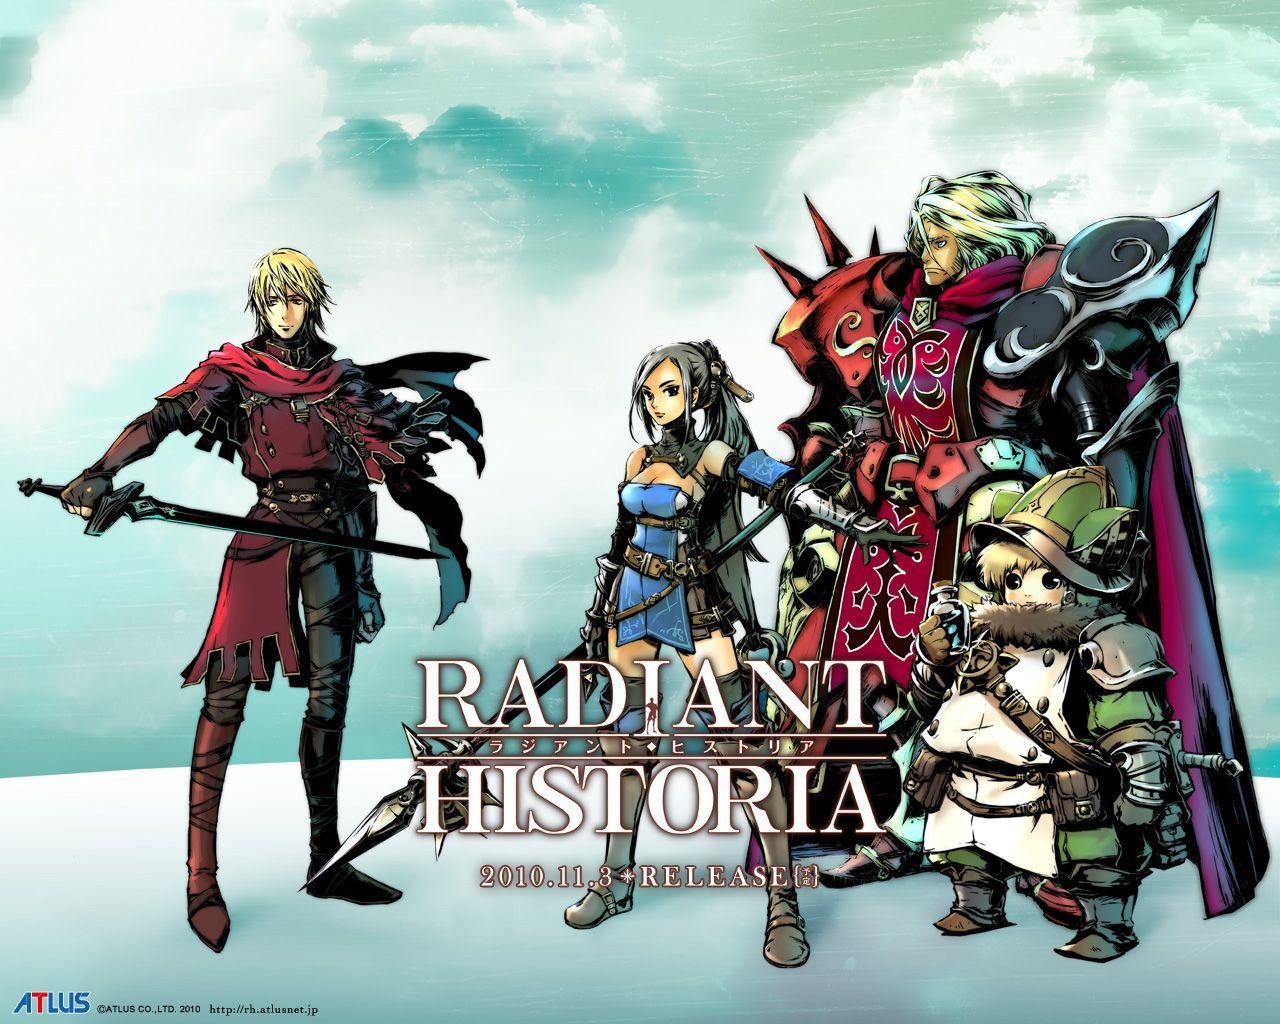 Radiant Historia. Video Game Underworld